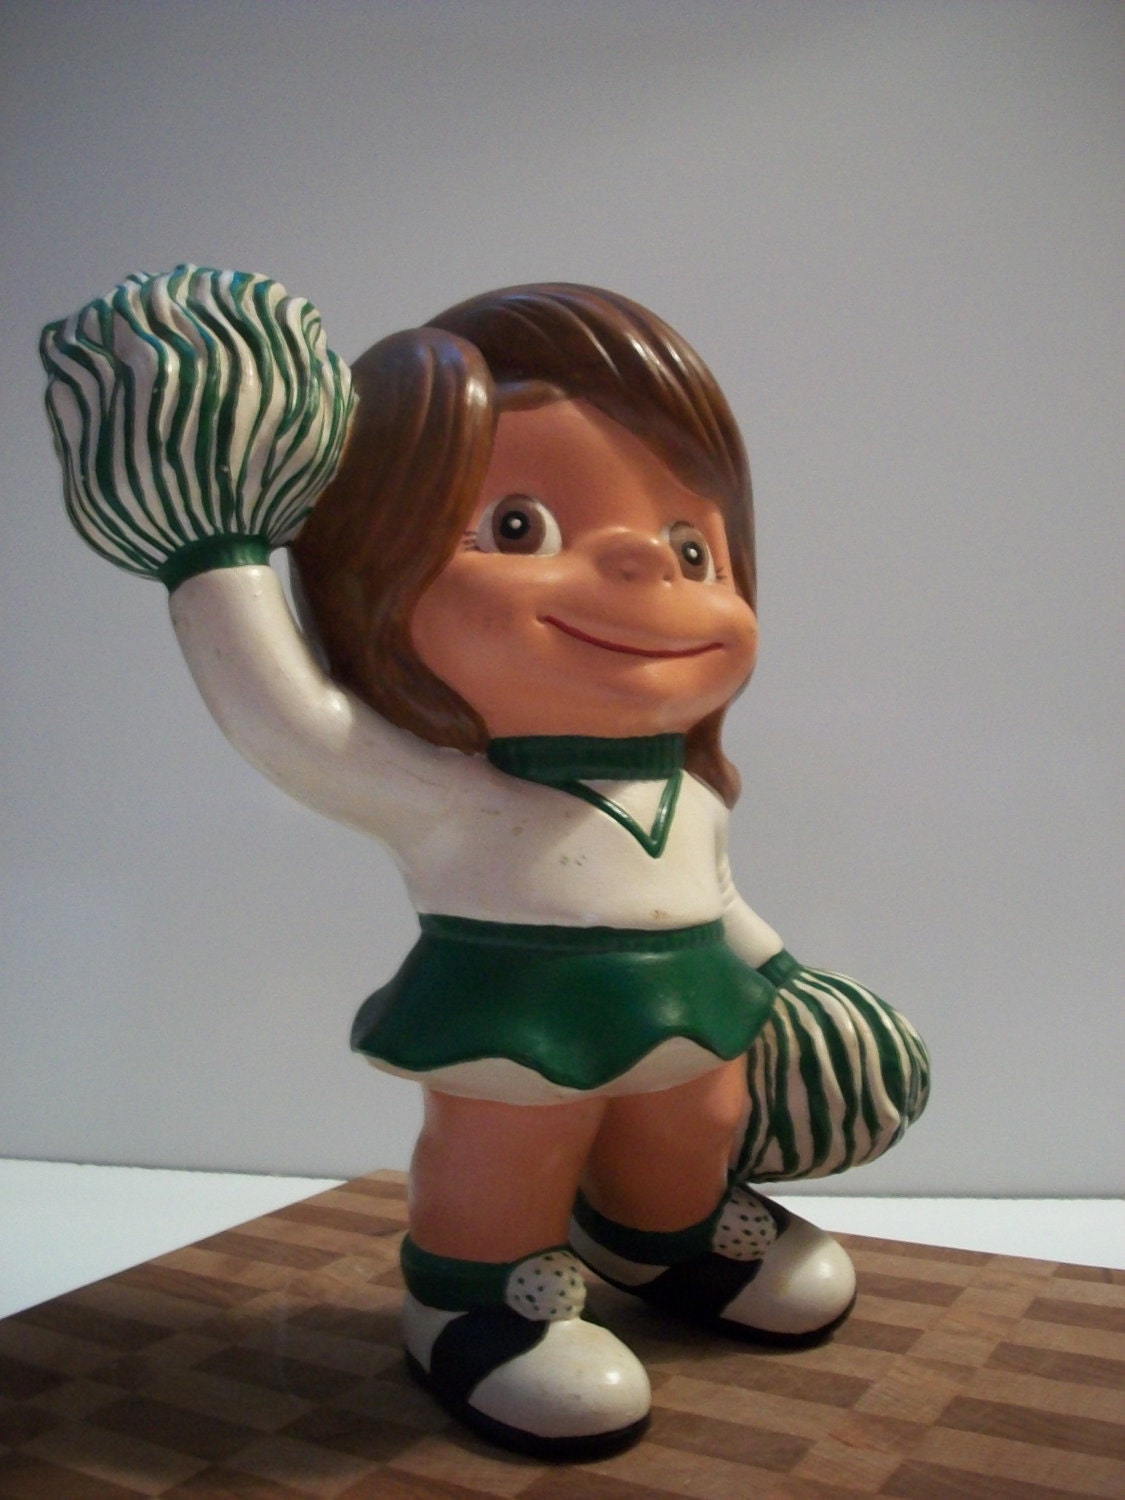 Vintage 1970s Atlantic Mold Ceramic Cheerleader Figurine Green and White - MarciesNook